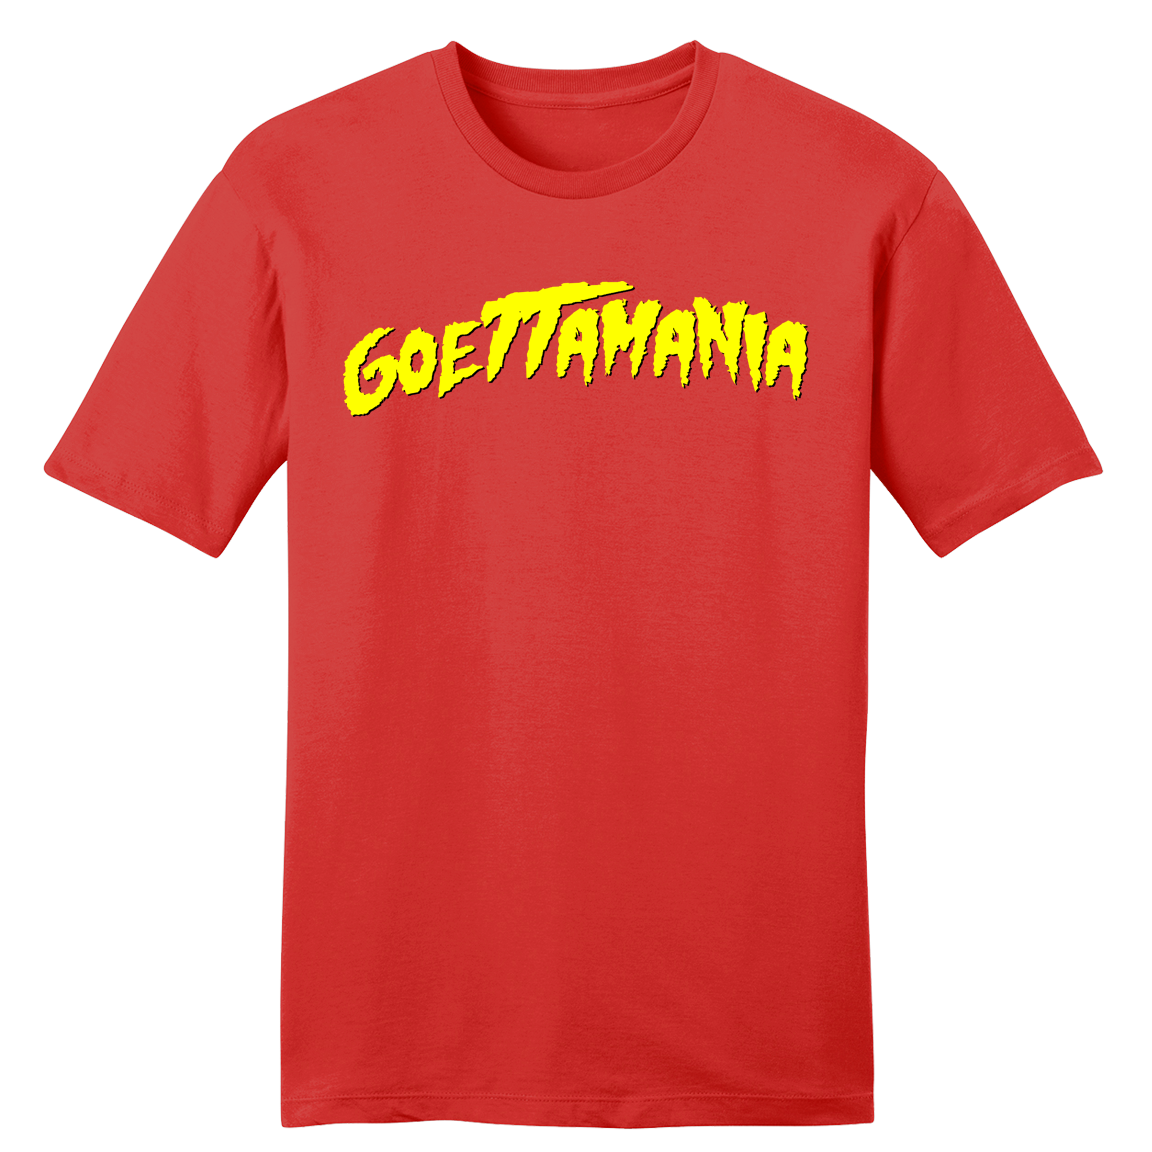 Goettamania - Cincy Shirts